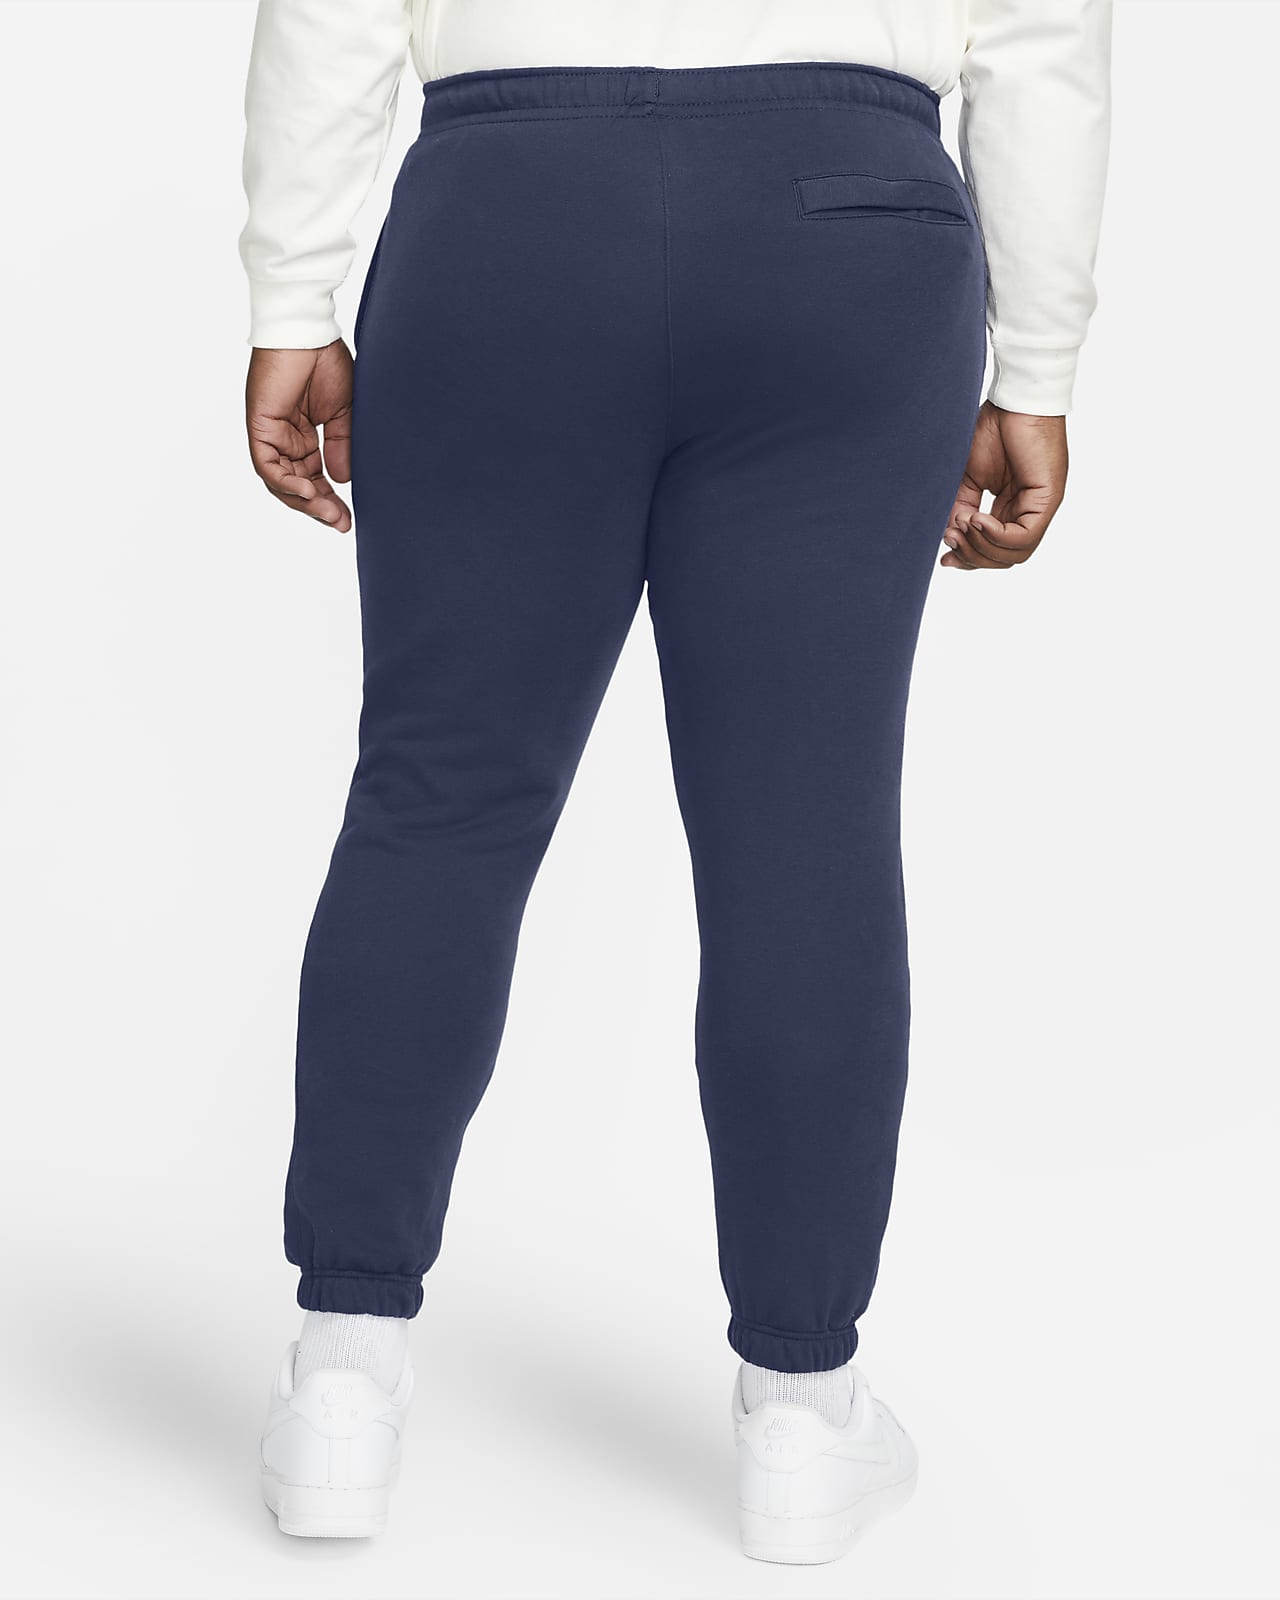 Chelsea Nike Club Fleece Pants - Navy - Womens